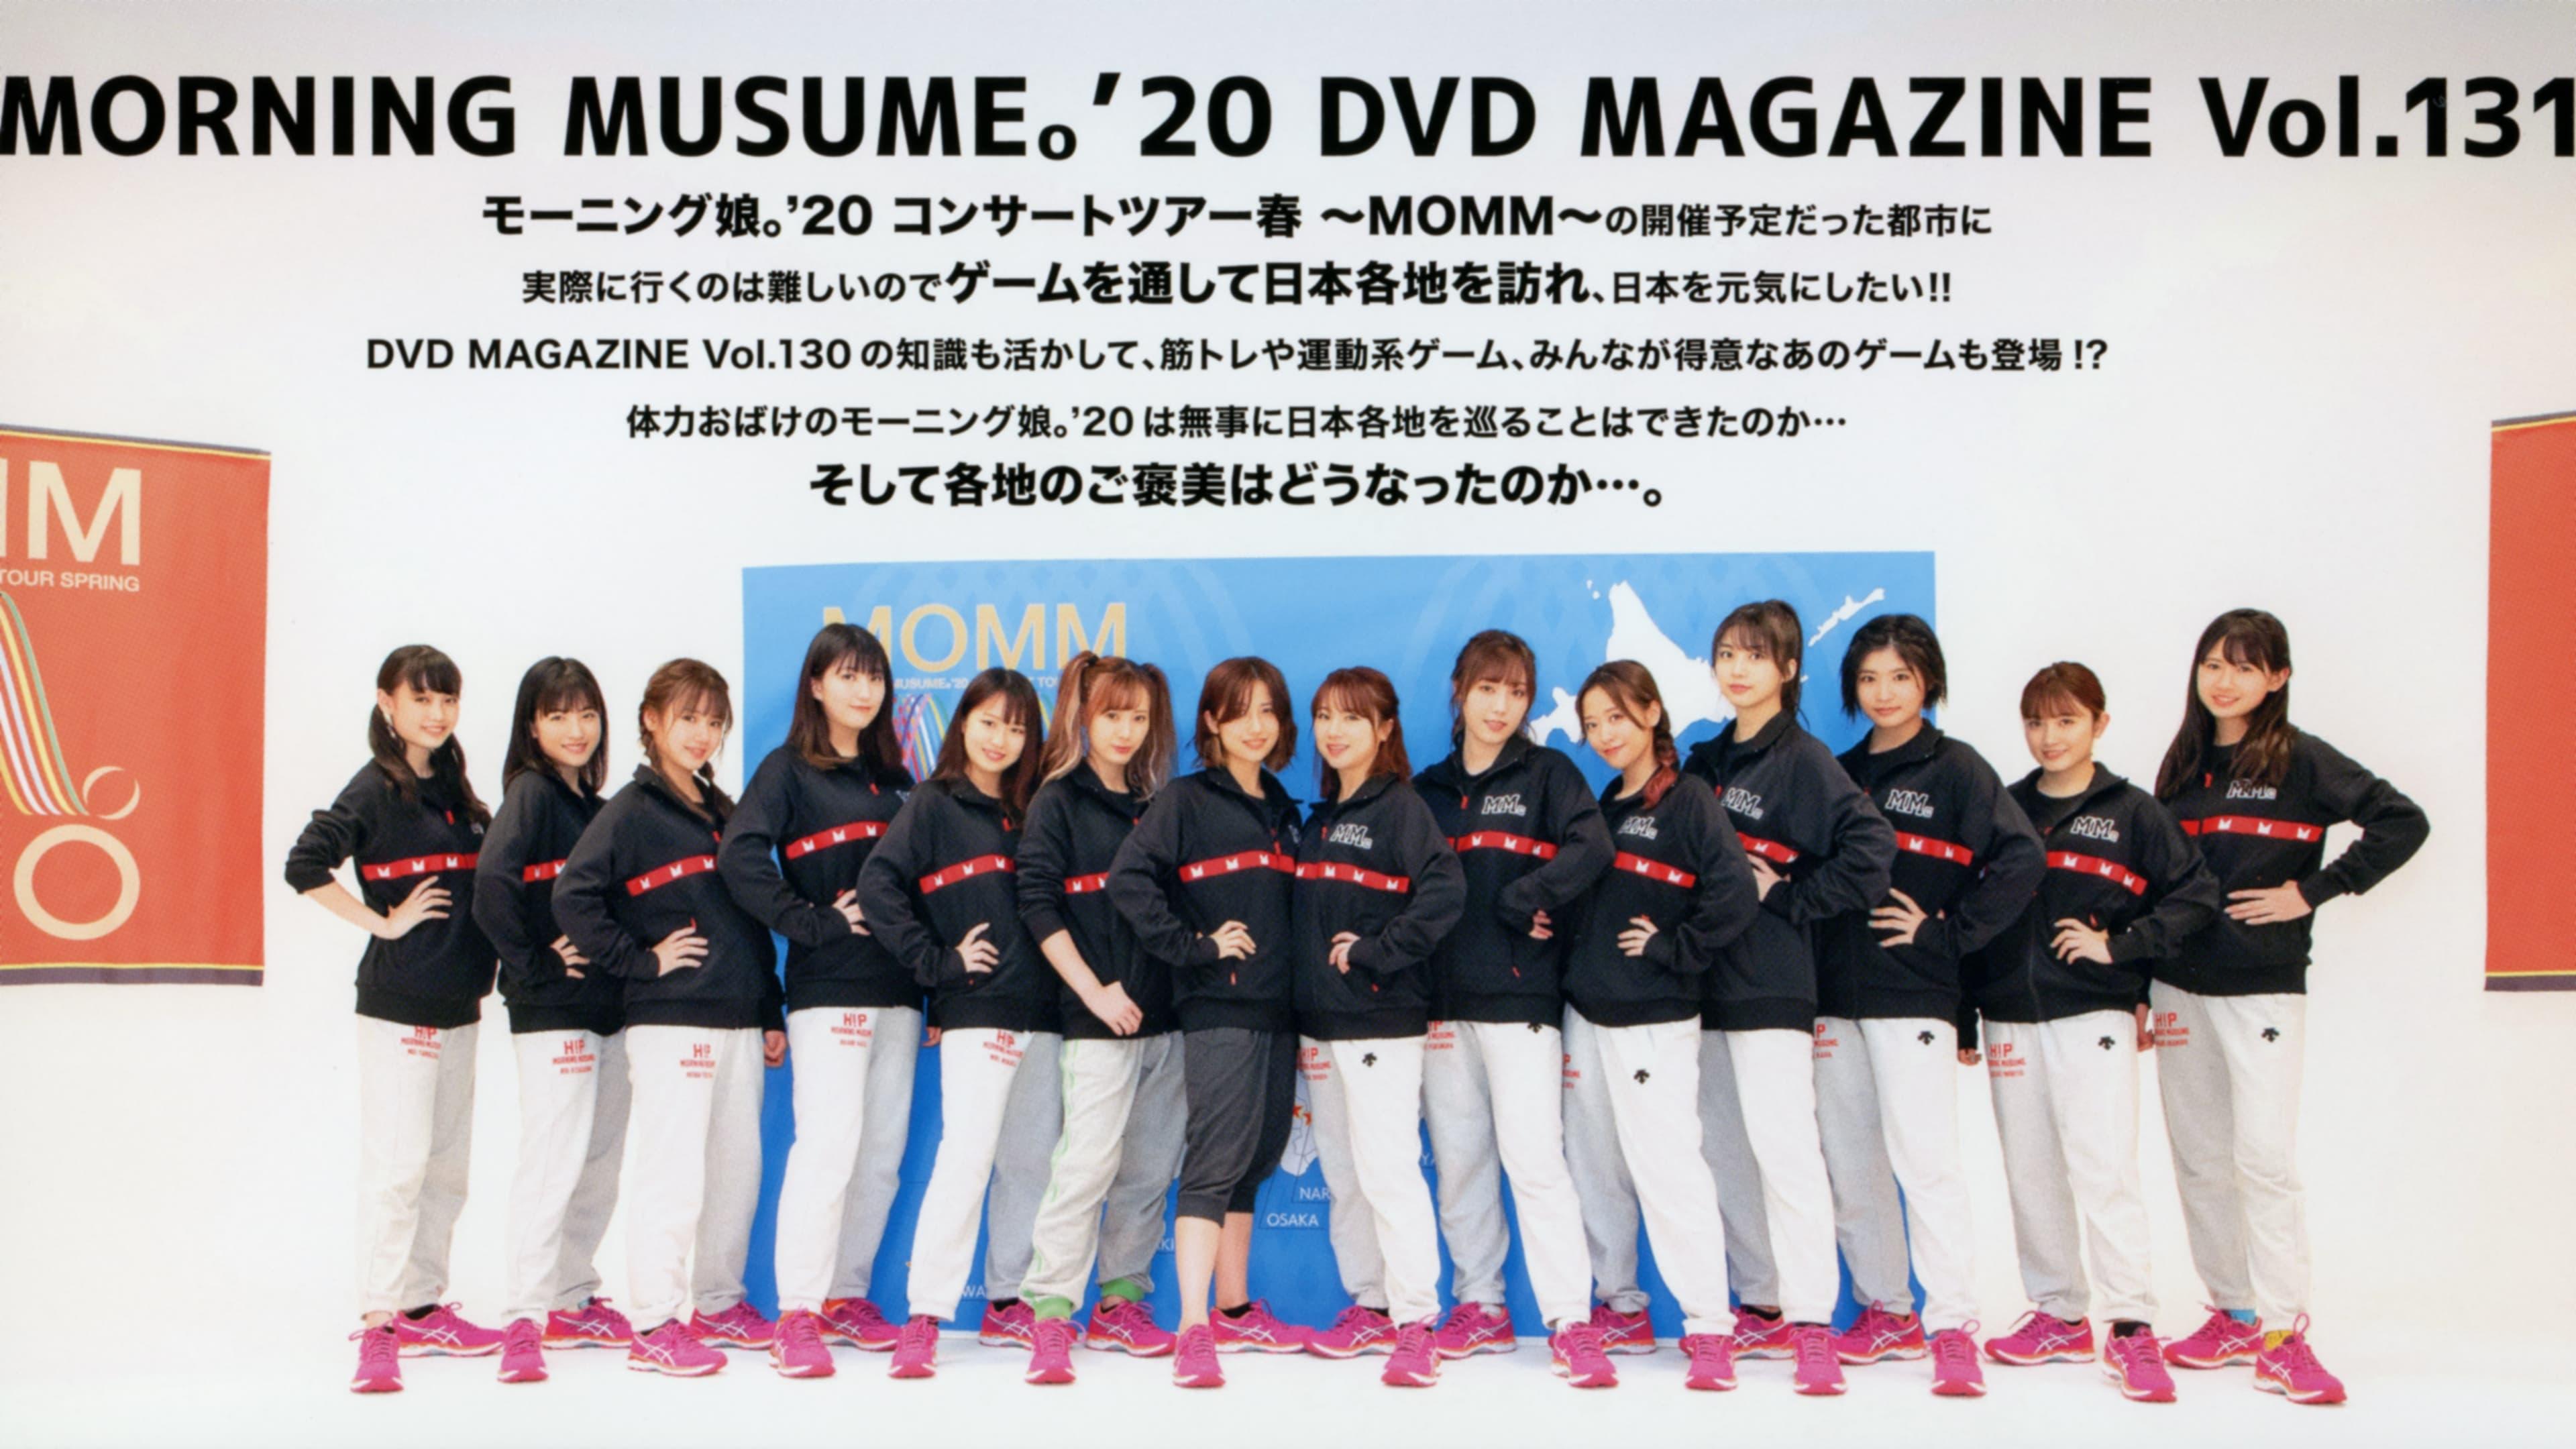 Morning Musume.'20 DVD Magazine Vol.131 backdrop